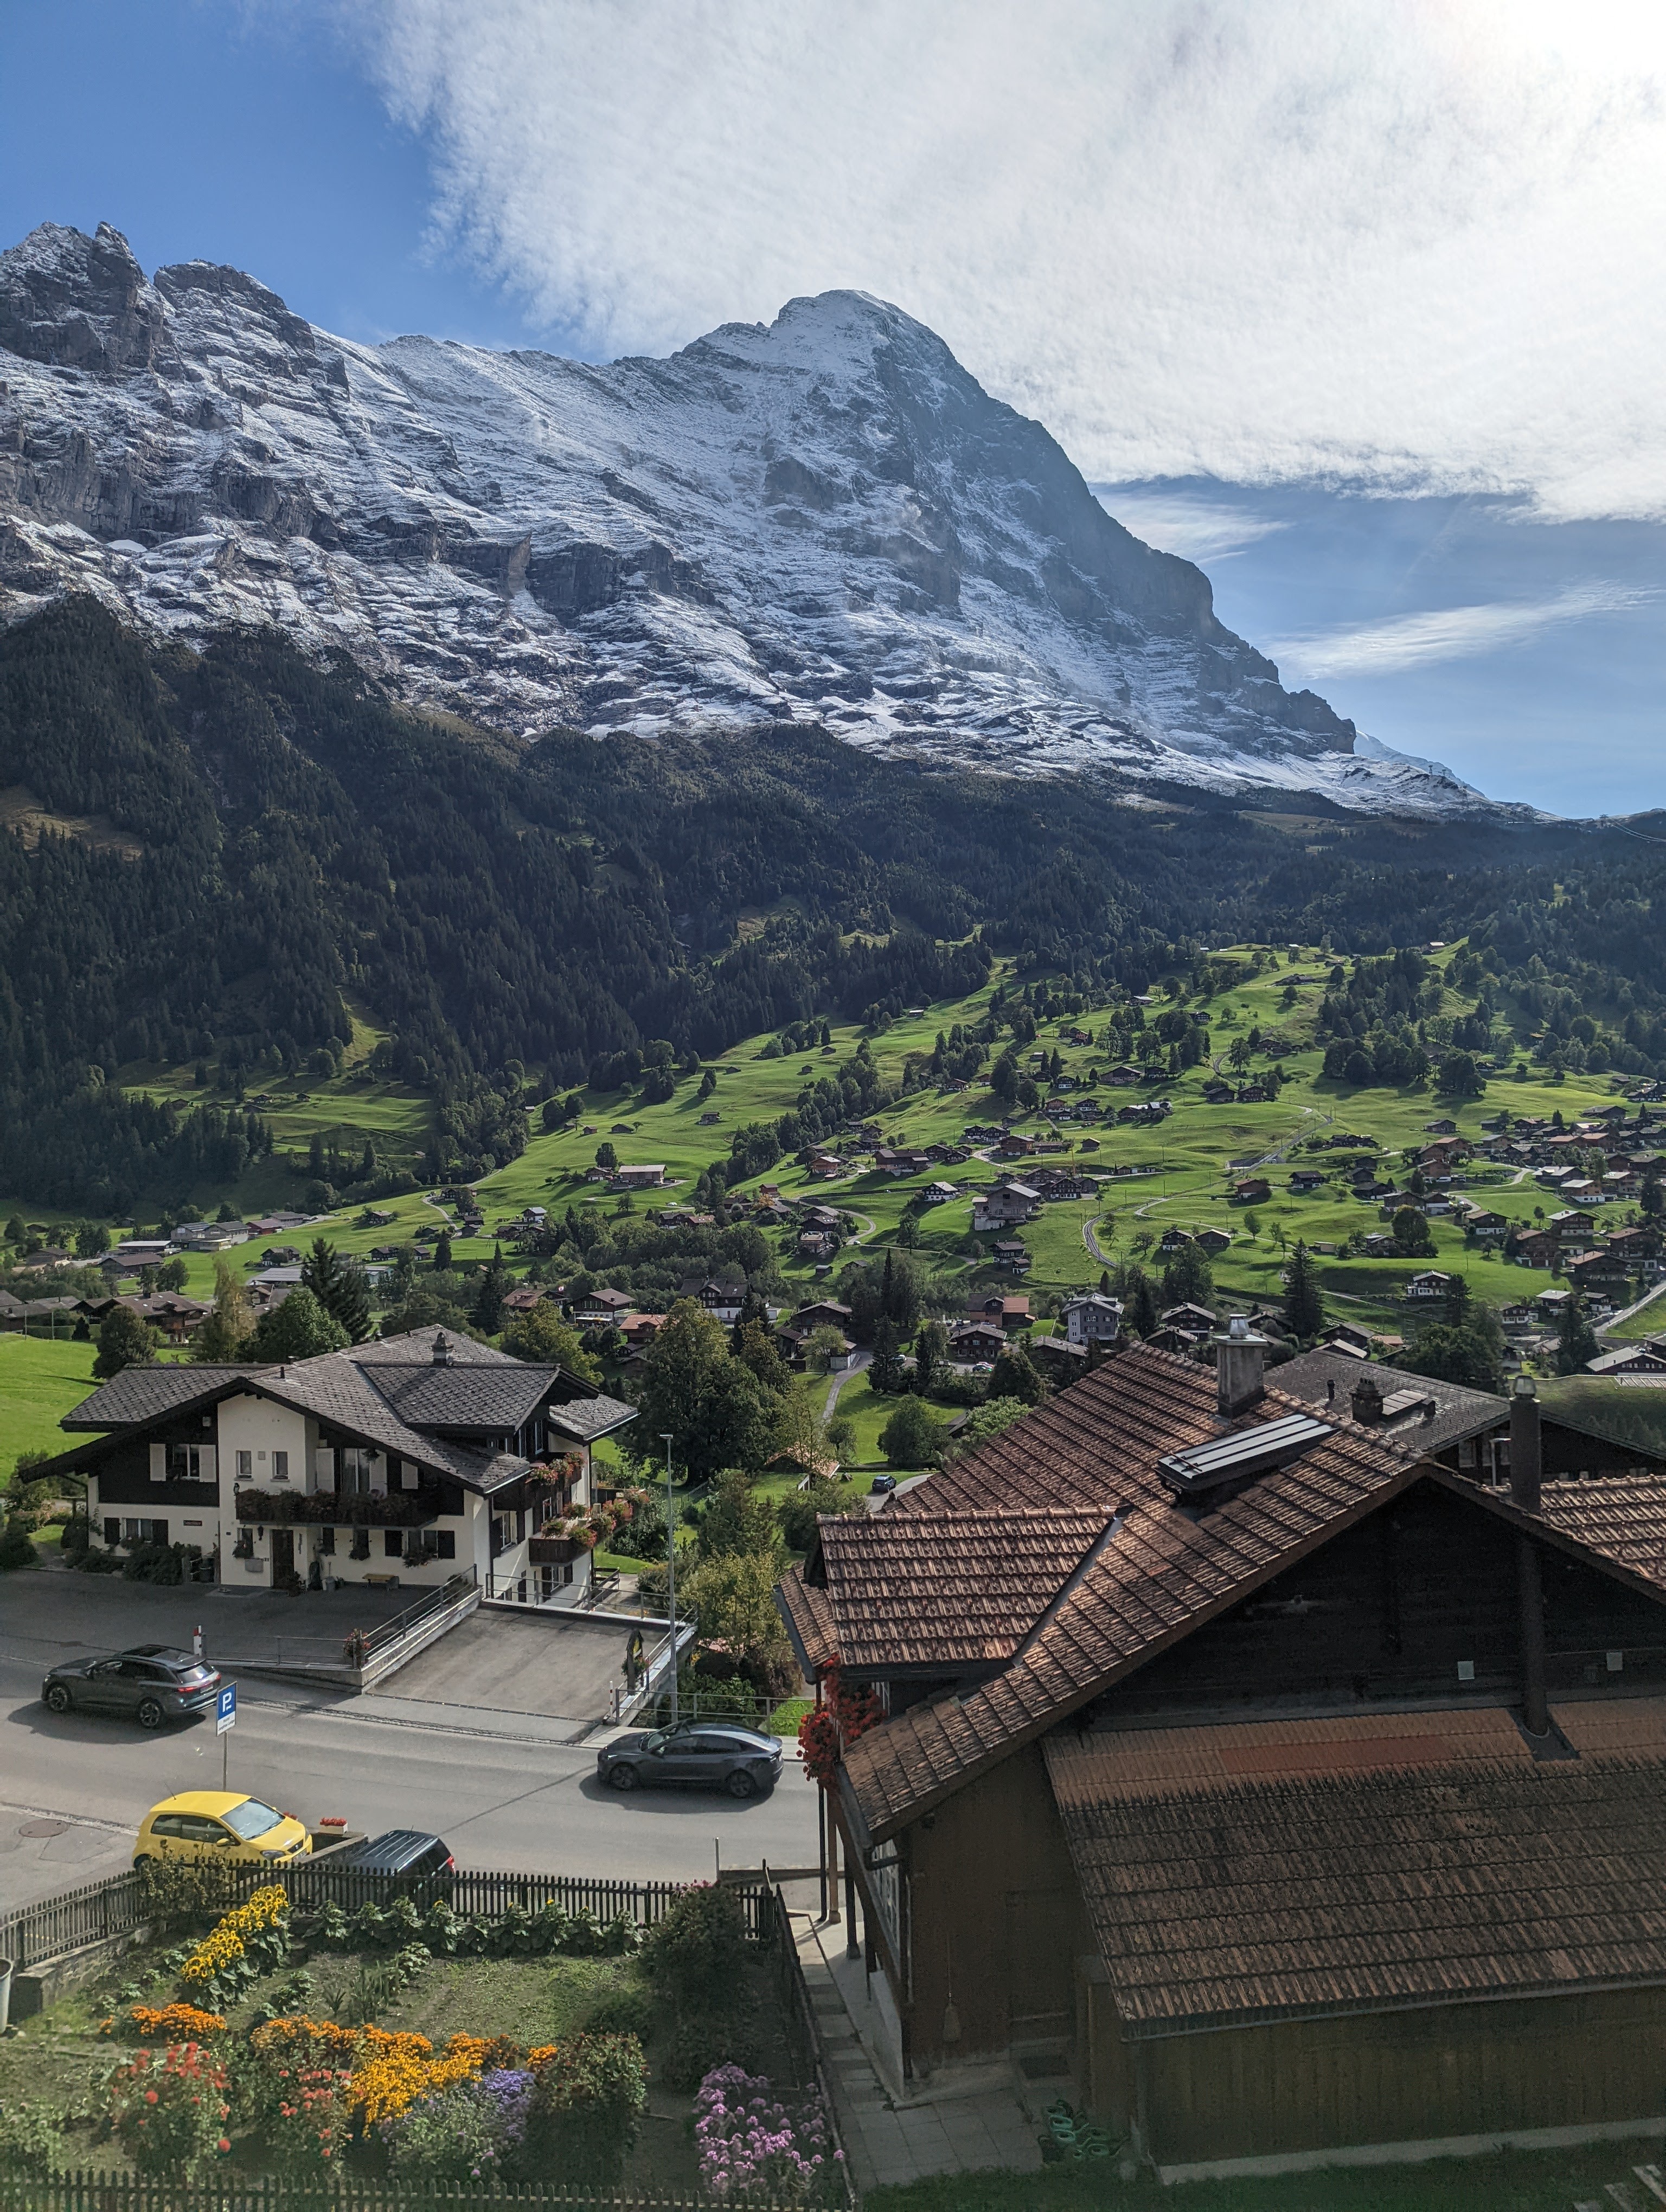 Eiger from Grindelwald